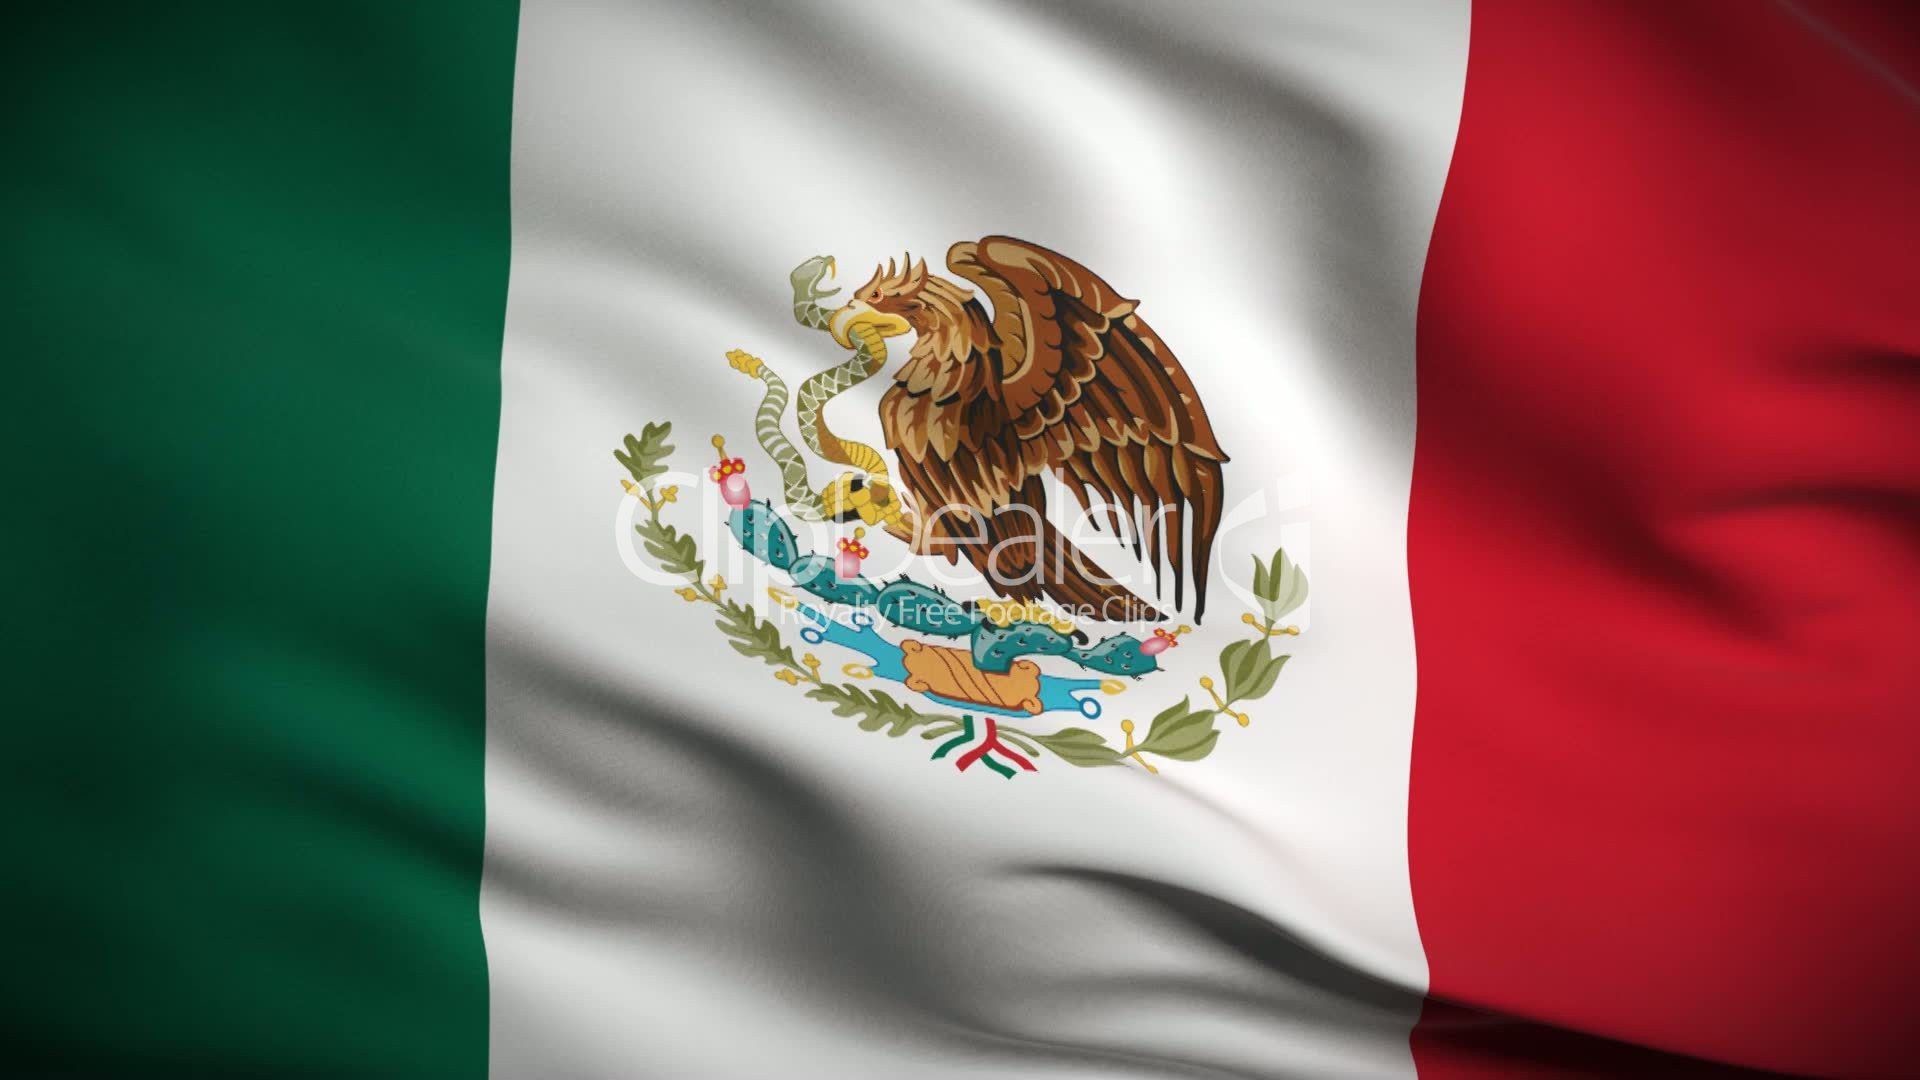 1920x1080  Mexico Wallpaper Unique Mexico Flag Hd Wallpaper Background Image  Viva Mexico